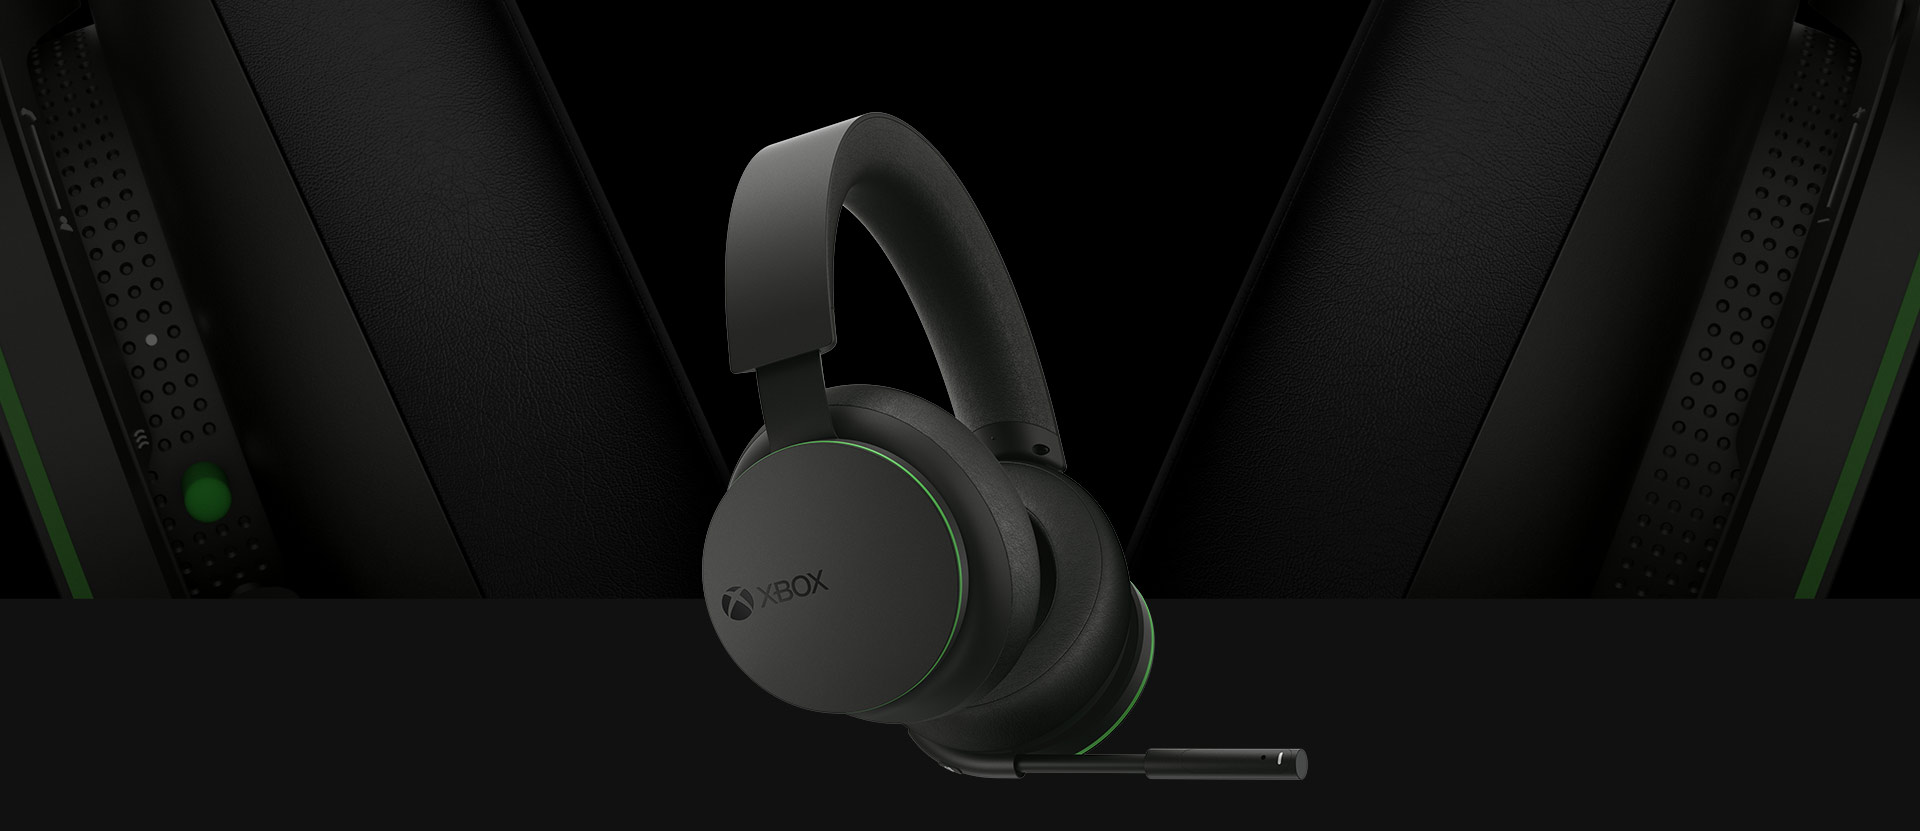 liner Mod viljen arabisk Xbox Wireless Headset | Xbox